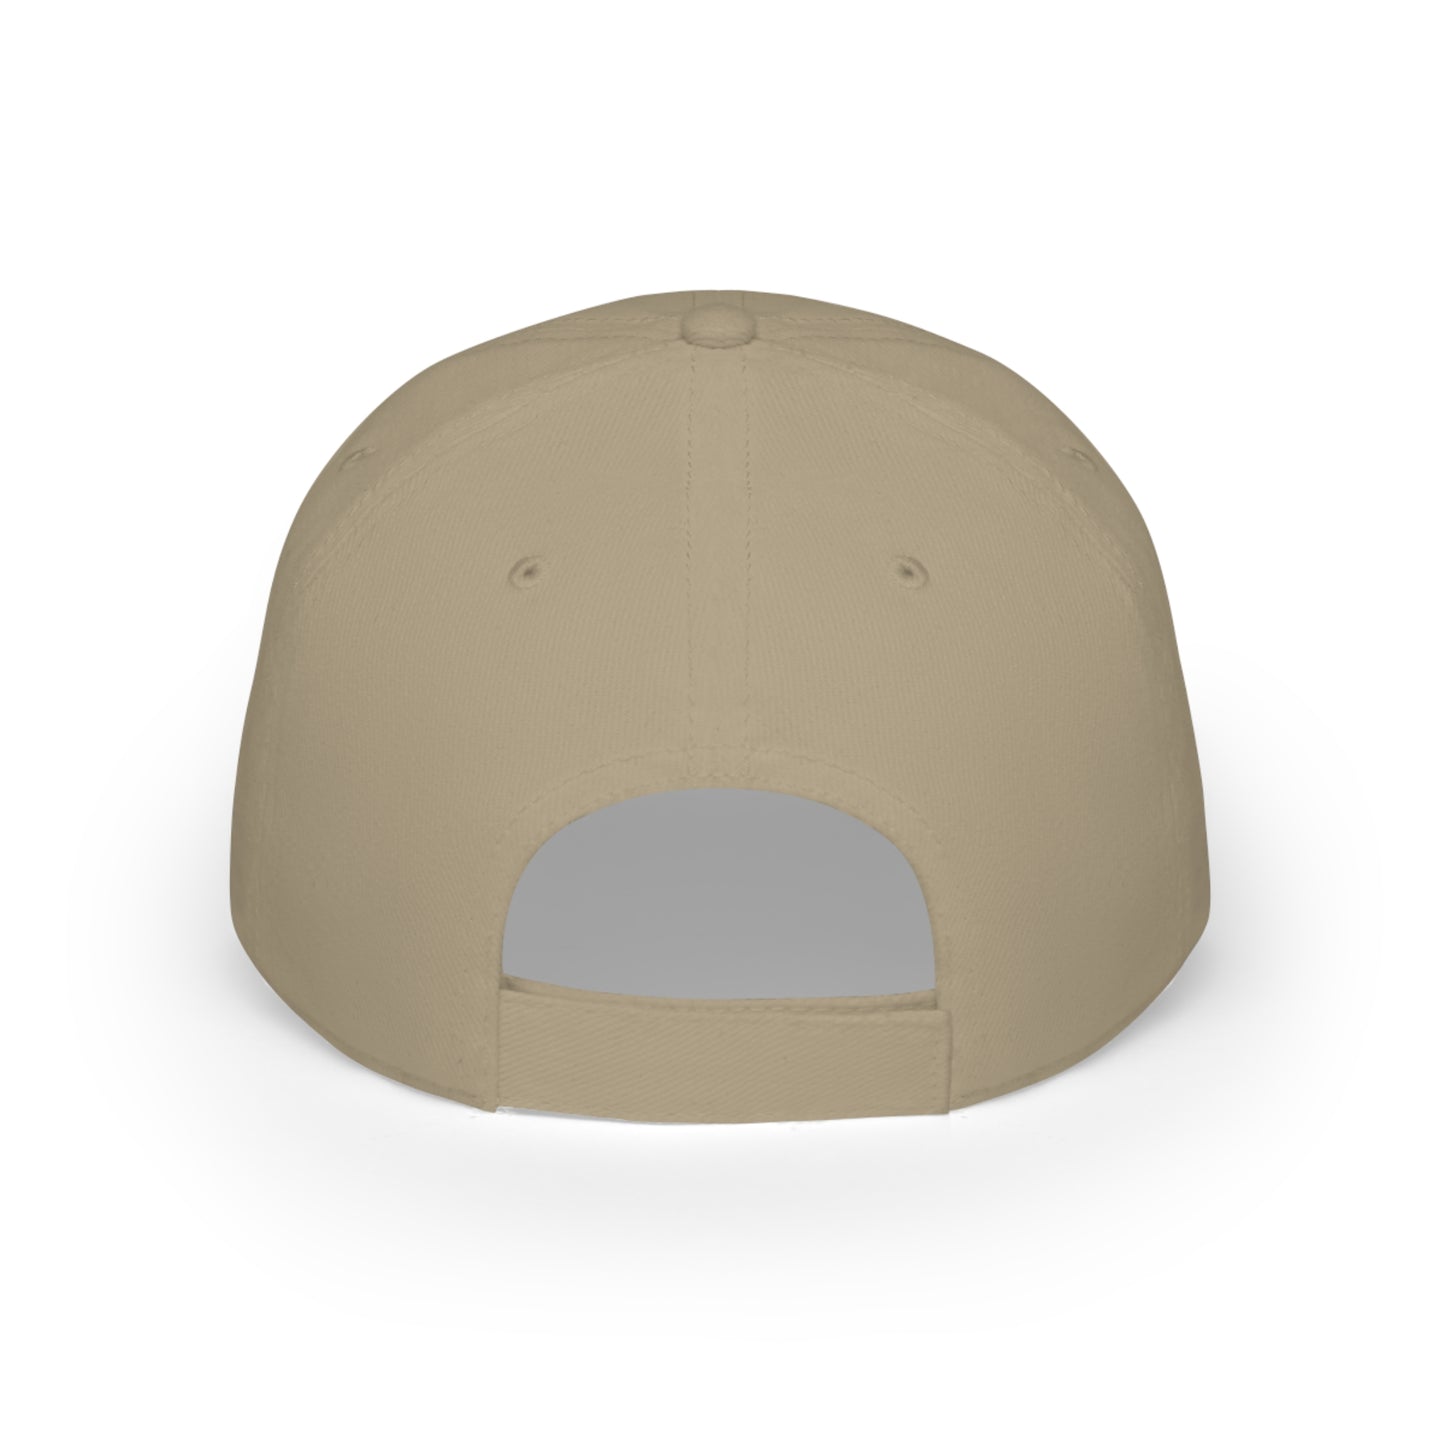 PHOENIX - Low Profile Baseball Cap